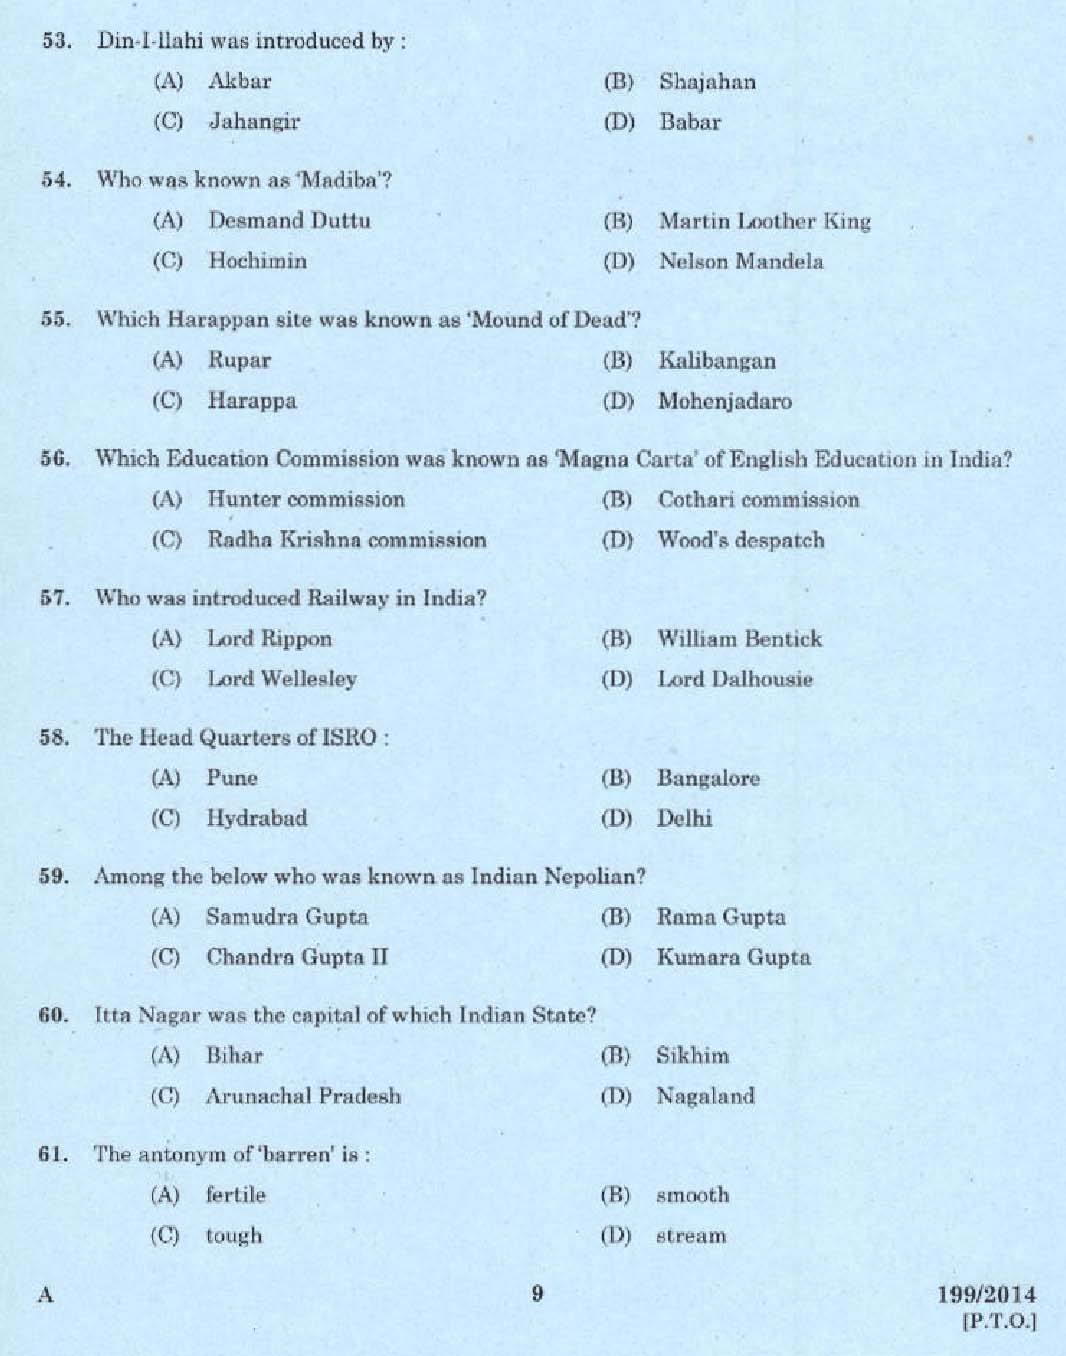 Kerala PSC Cine Assistant Exam Question Code 1992014 7